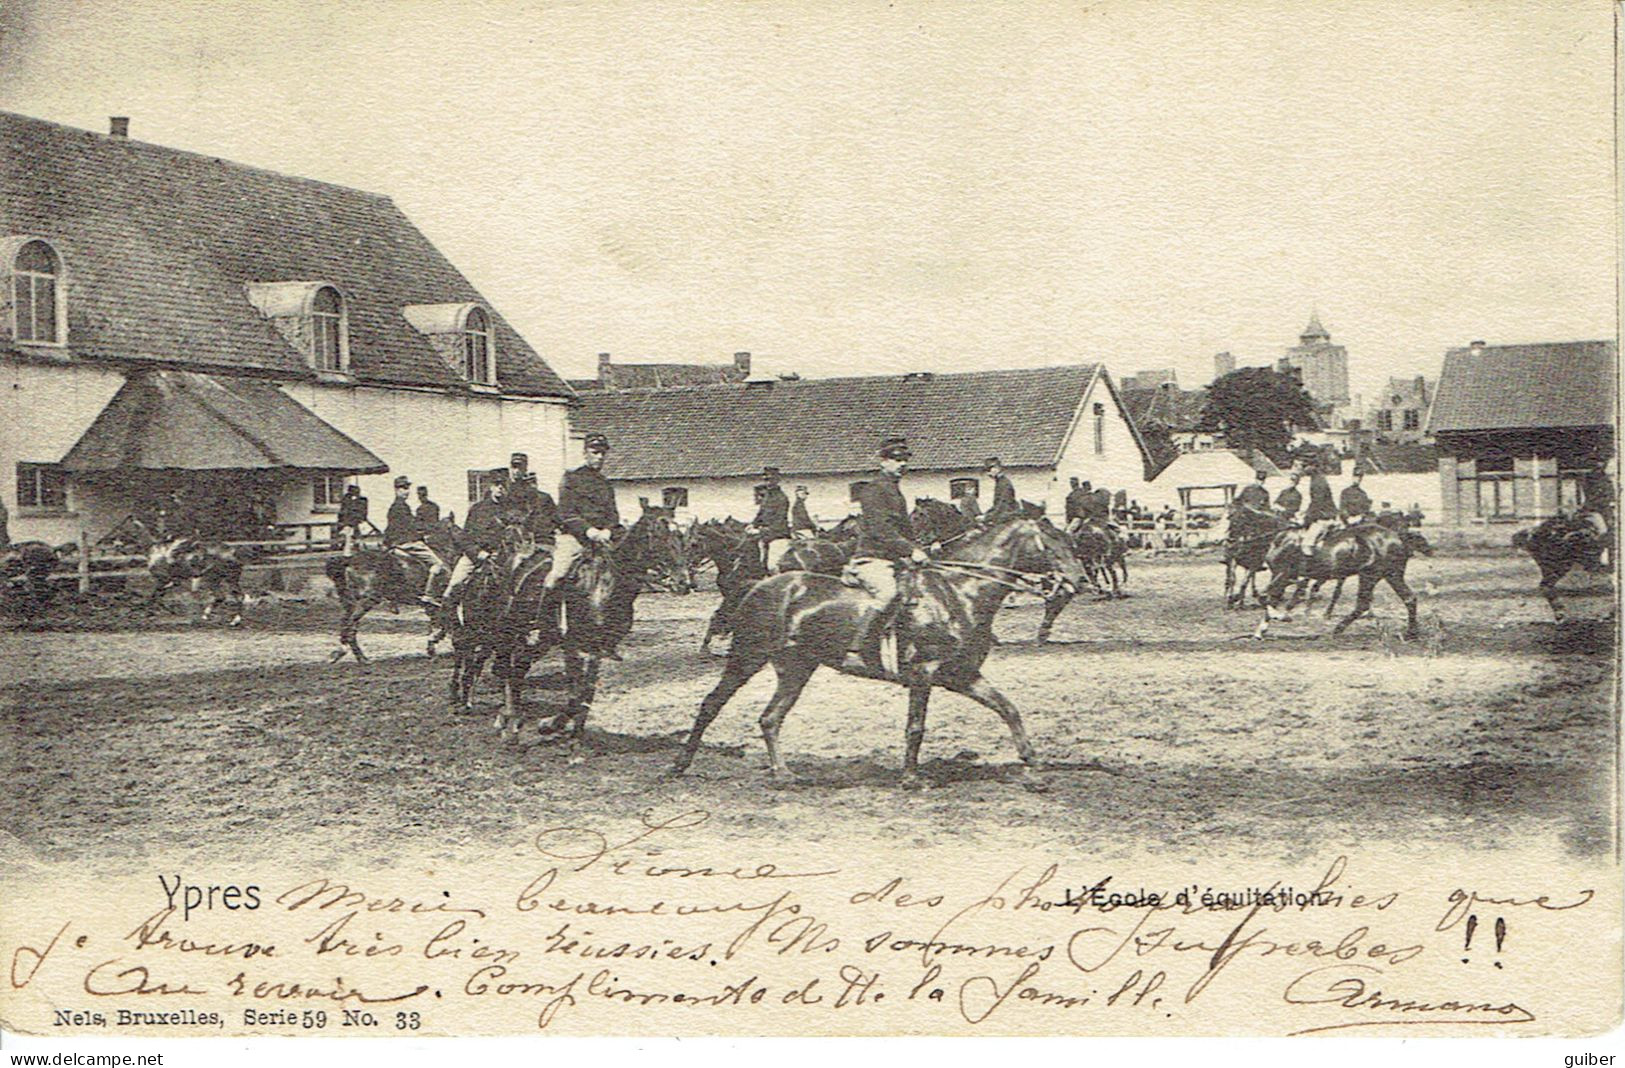 Ieper-ypres  L'ecole Militaire D'equitation  1901 - Ieper